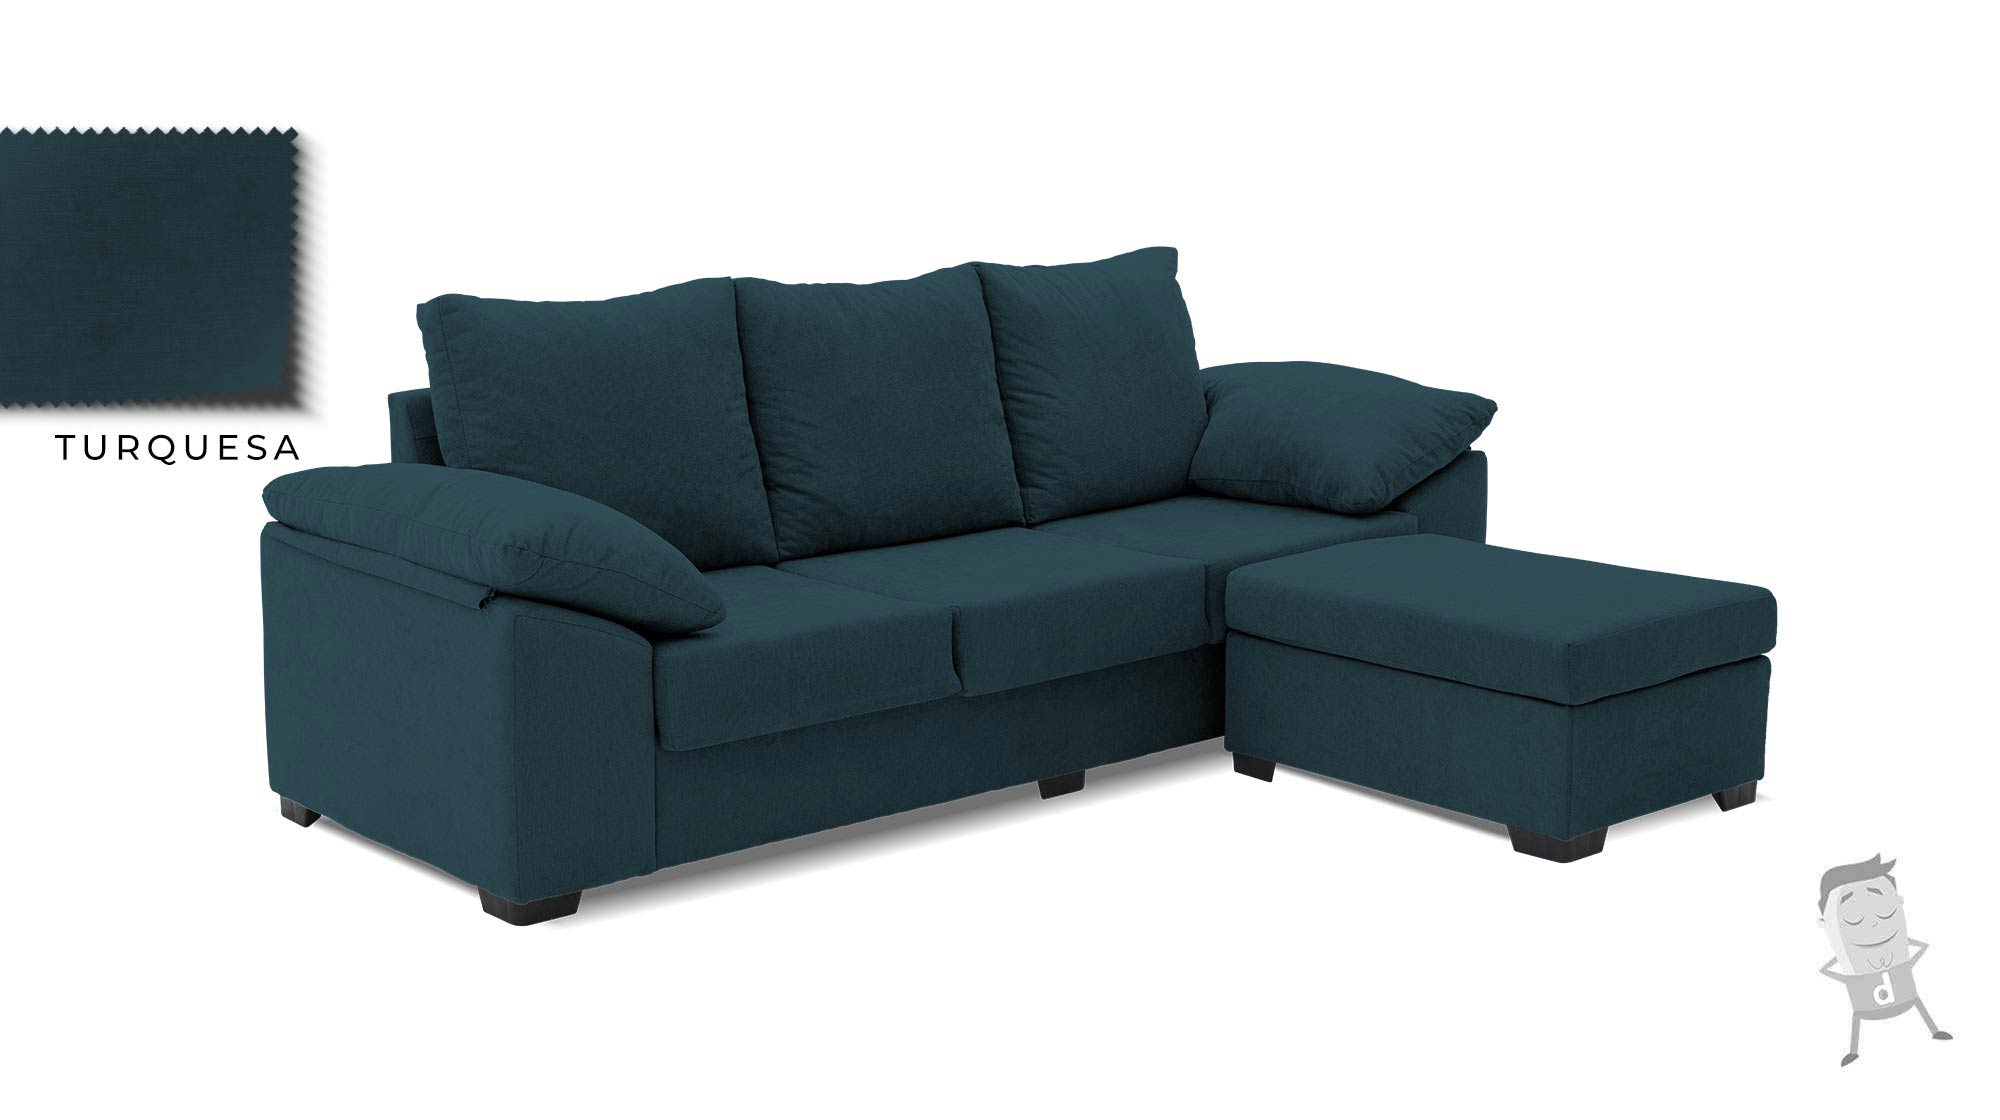 sofa-chaise-longue-ceo-turquesa-lateral